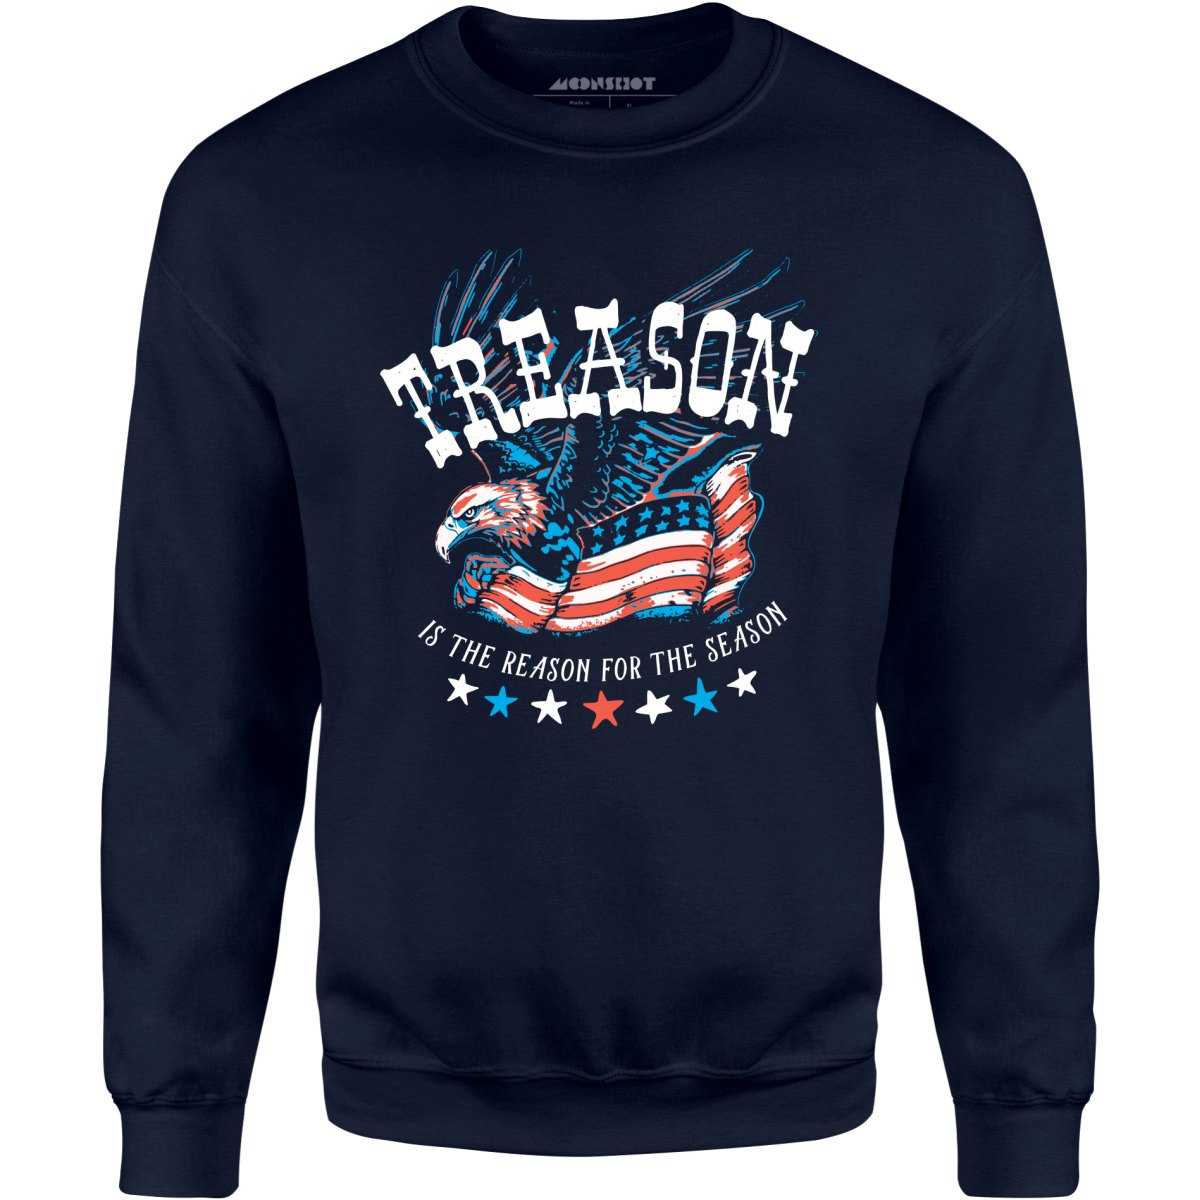 Treason is the Reason for the Season - Unisex Sweatshirt